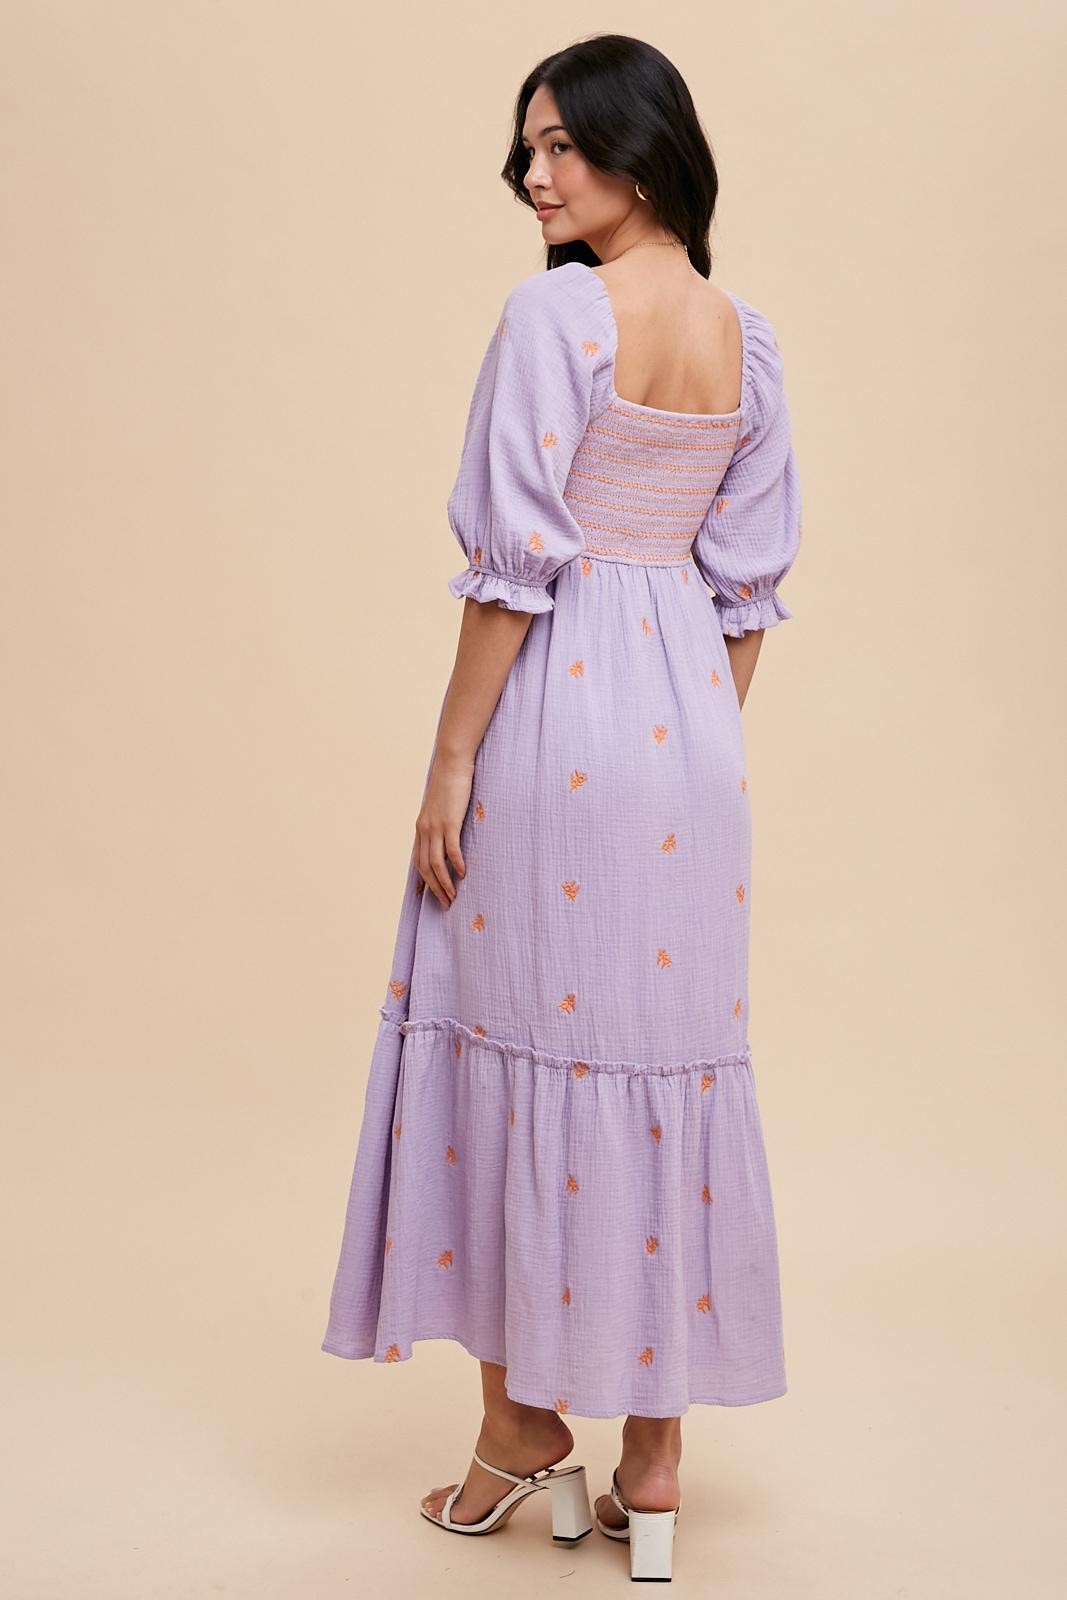 Tory Embroidered Gauzey Midi Dress - Lavender